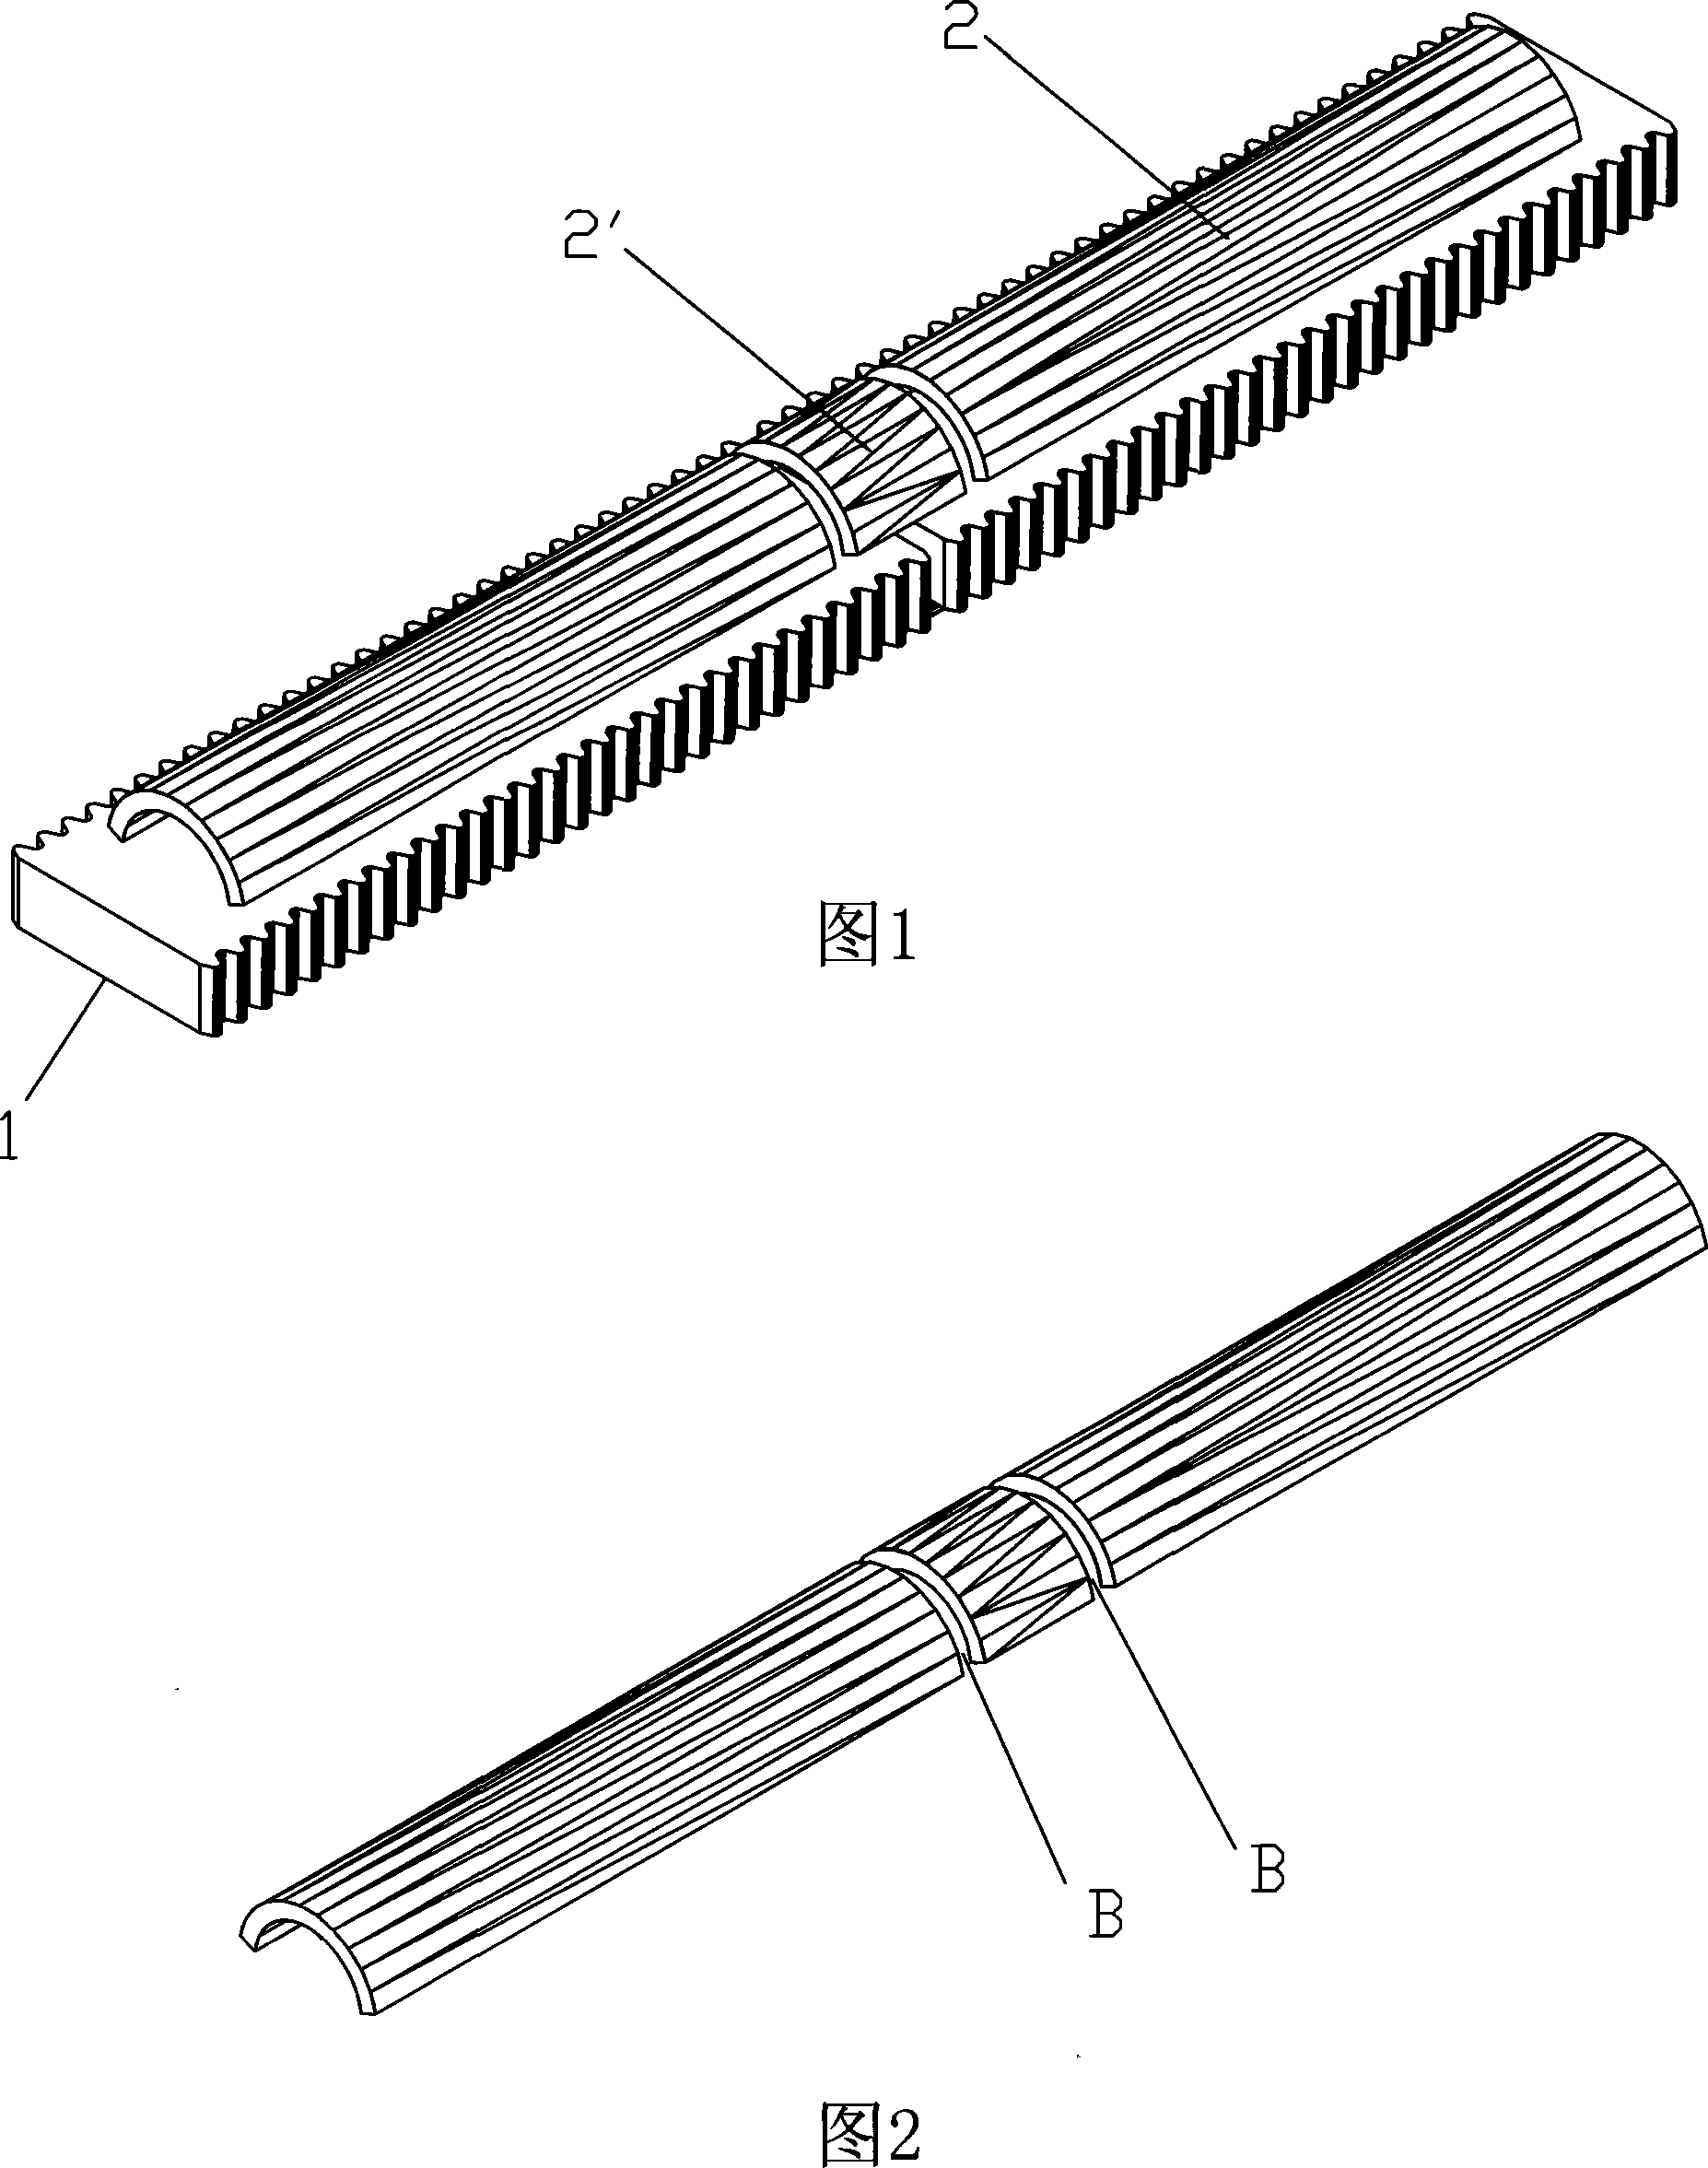 Construction welding method for main chord pipe inside platform legs